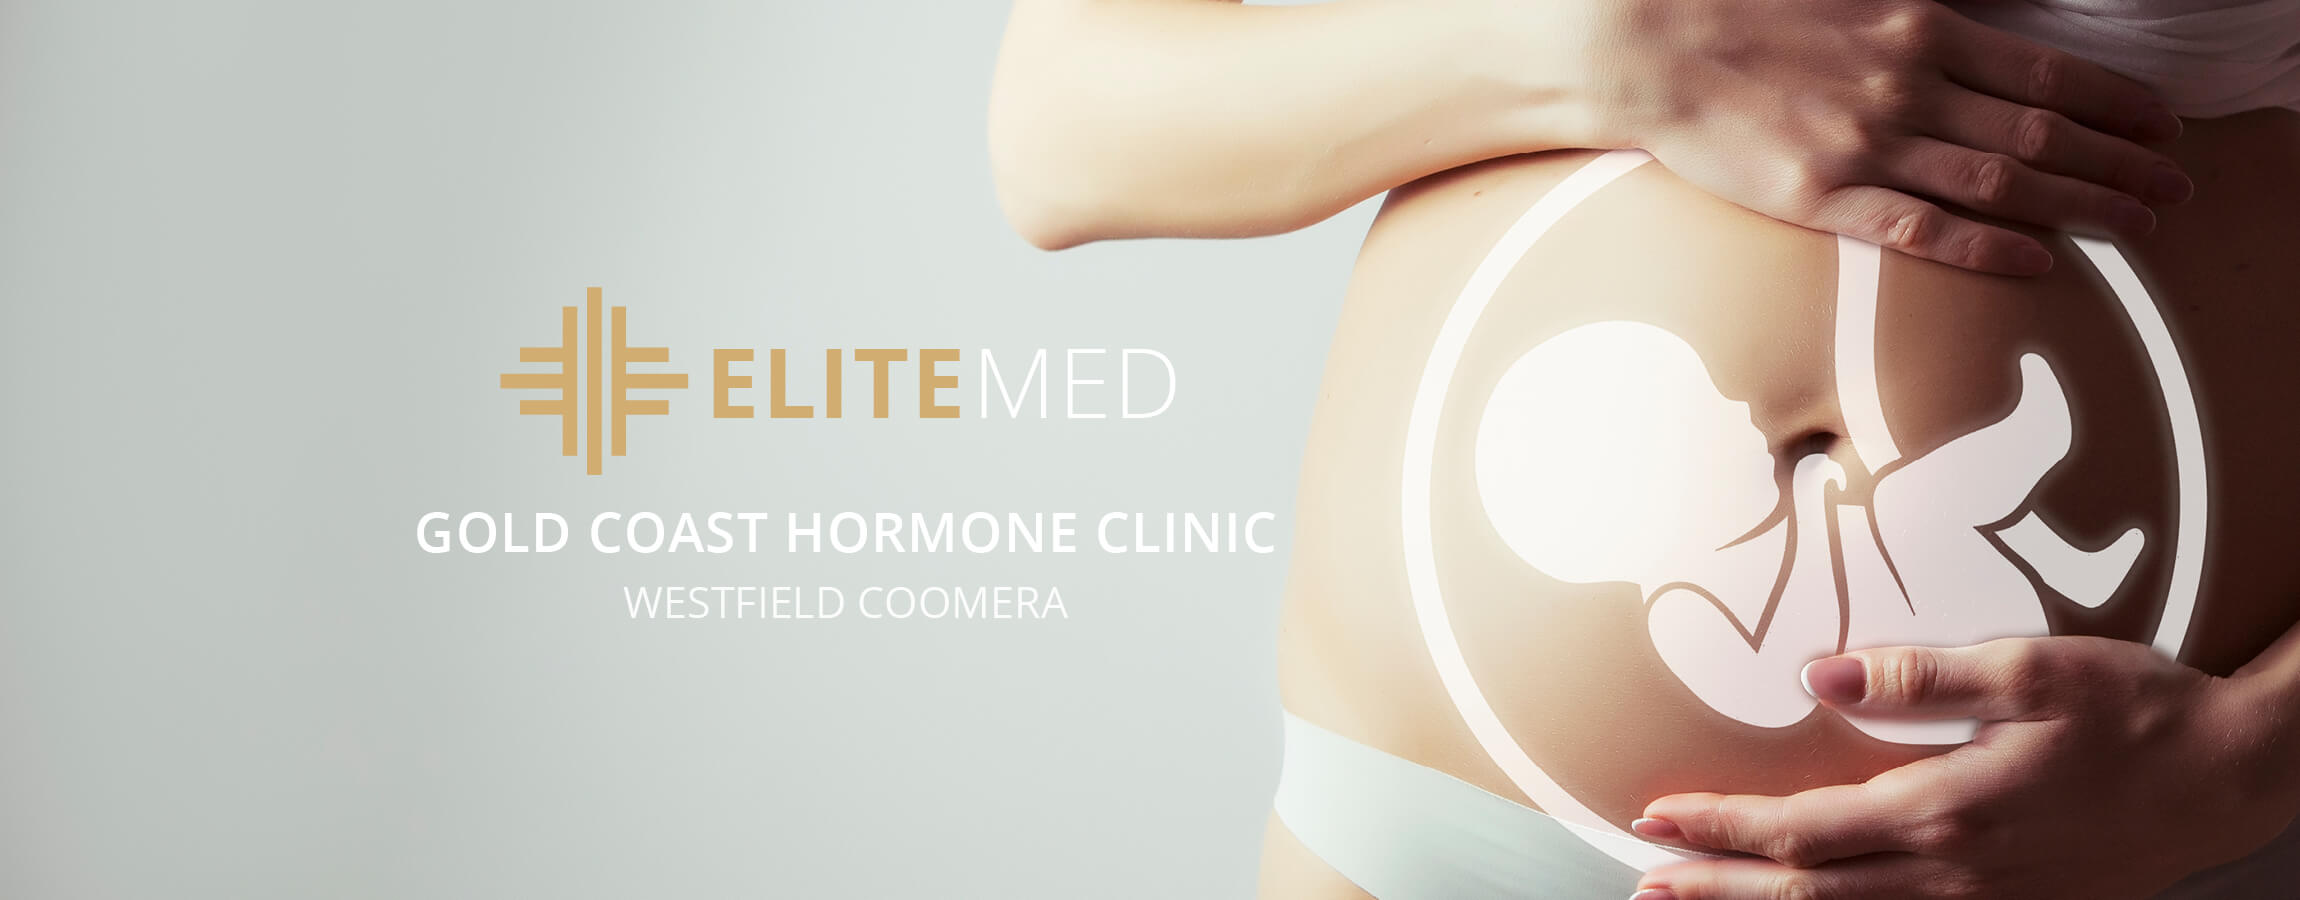 Gold Coast Hormone Clinic